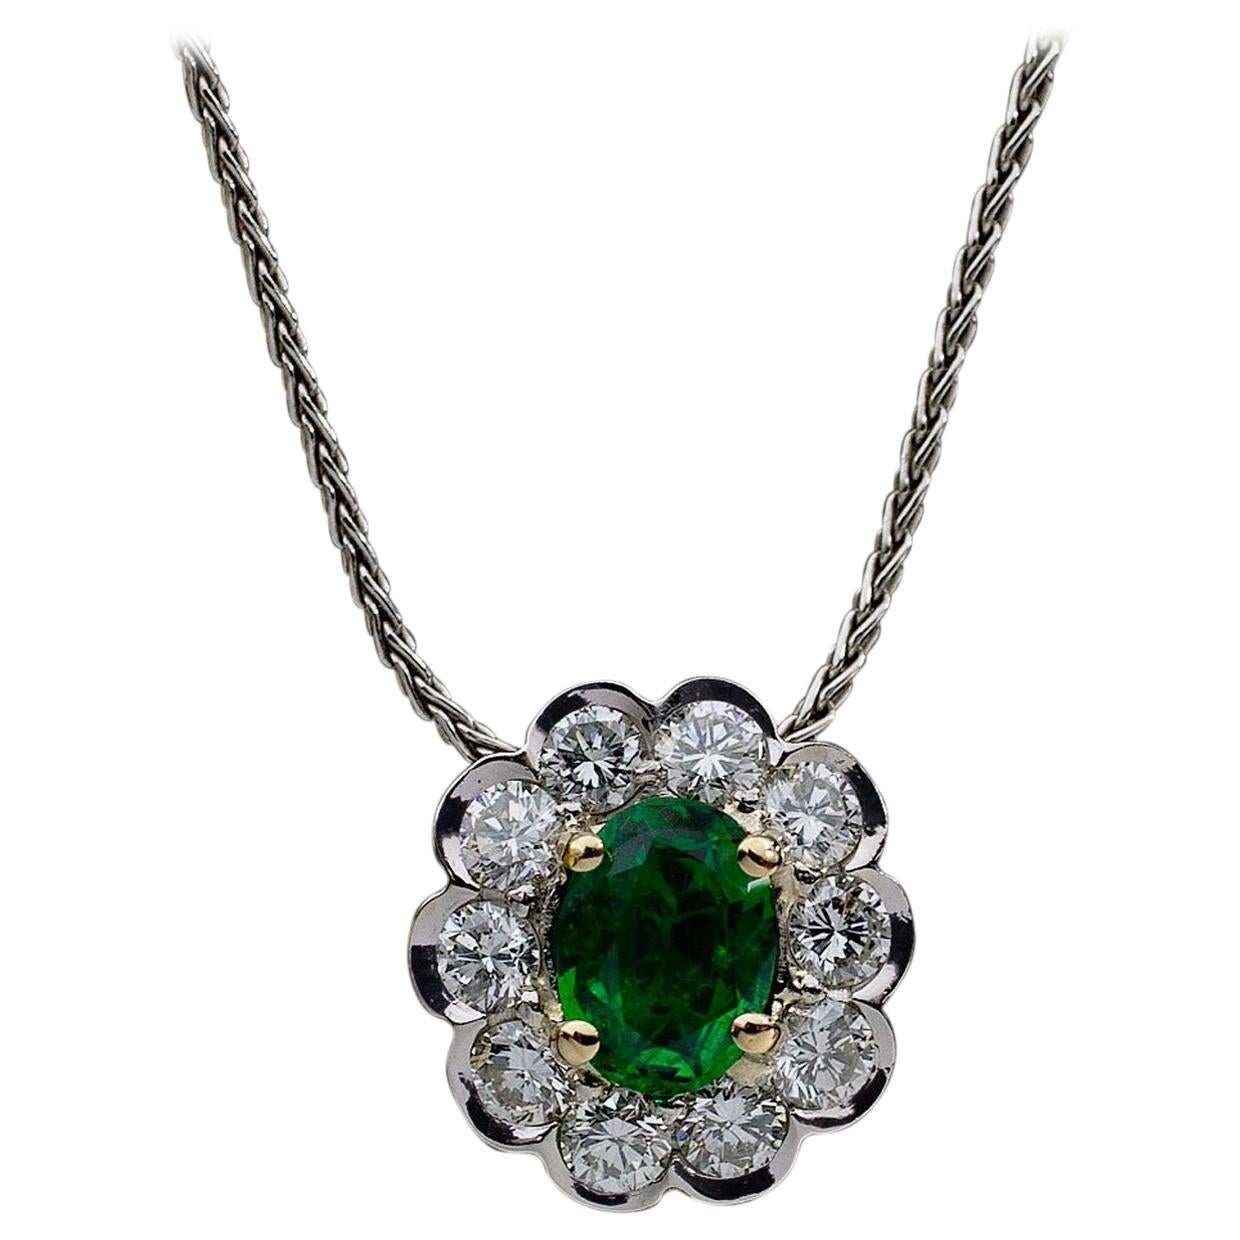 Platinum/18kyg 1.95 Carat Oval Cut Emerald and Diamond Pendant Necklace